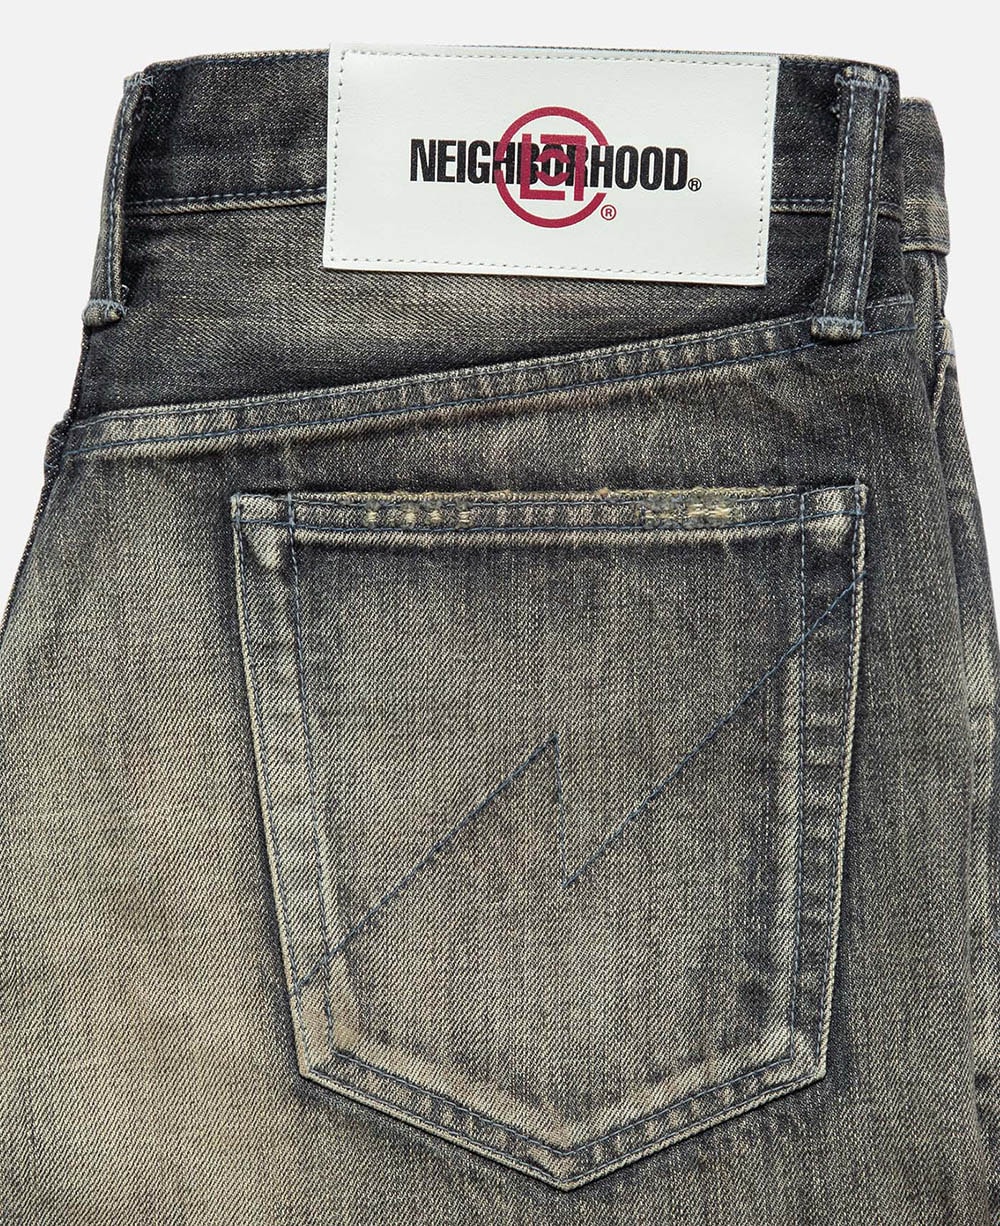 CLOT x NEIGHBORHOOD 最新聯名系列正式登場